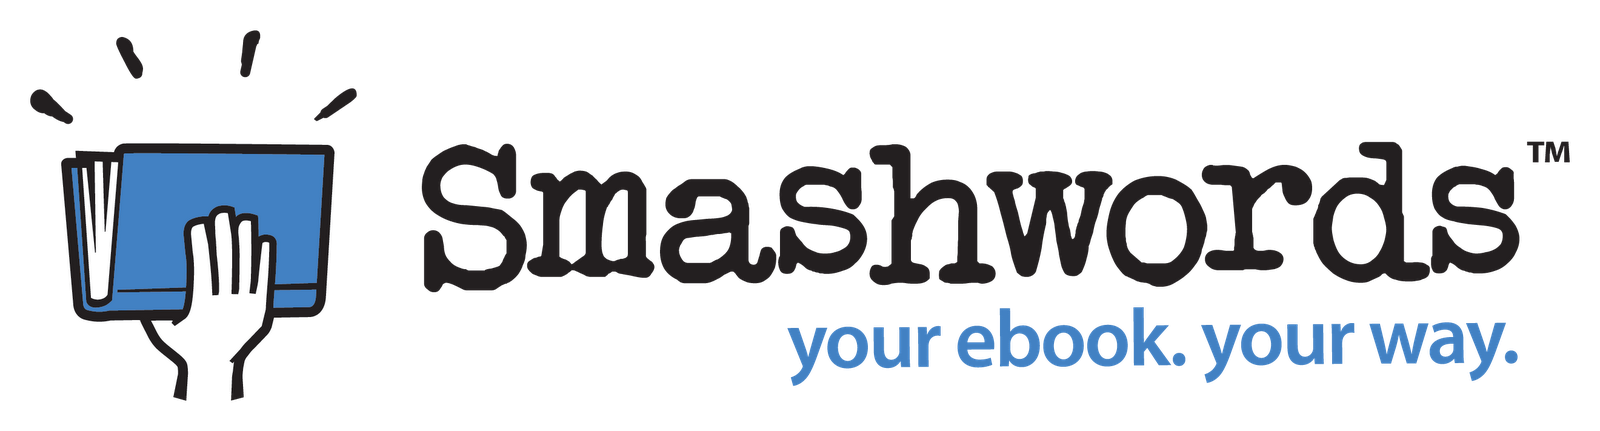 smashwords logo.png